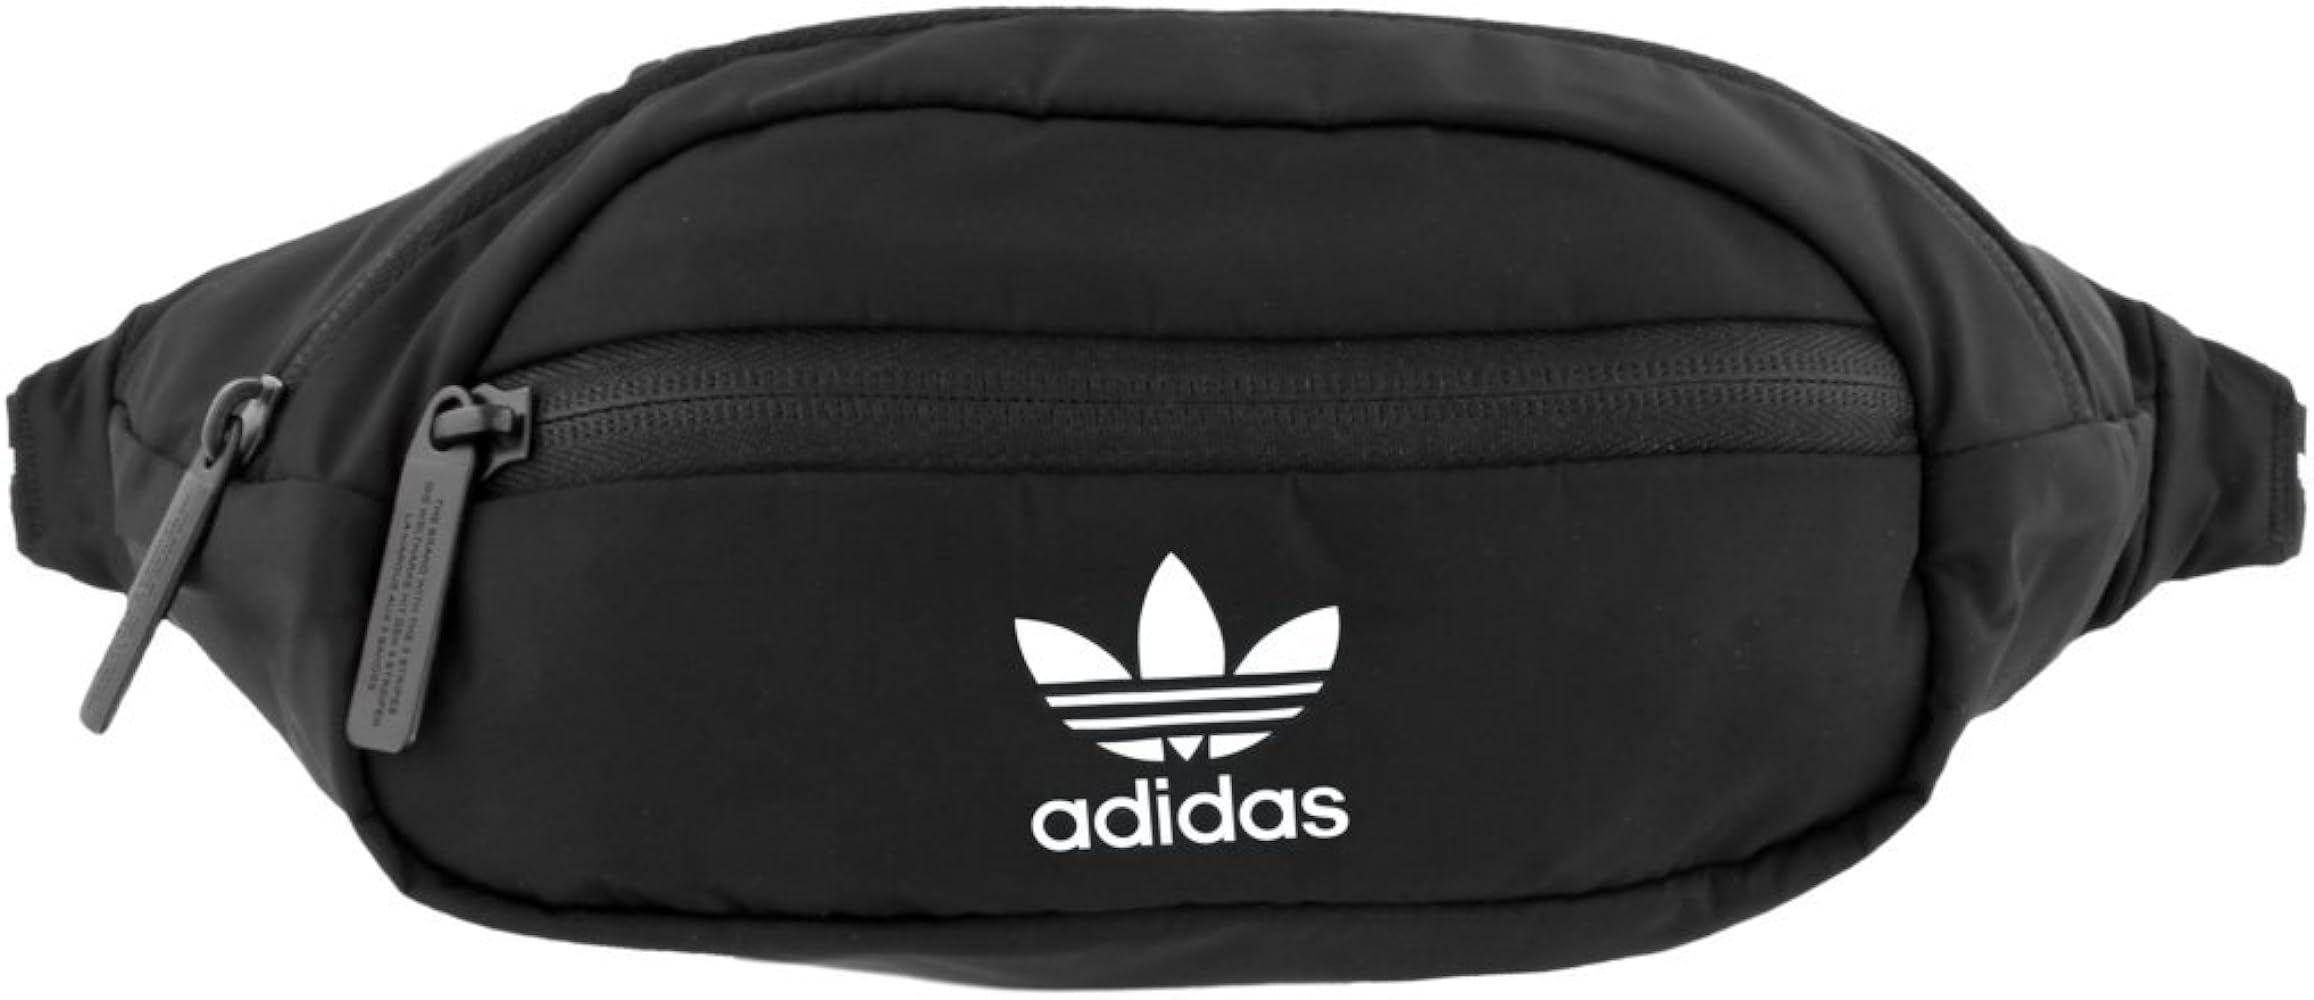 adidas Originals National Waist Fanny Pack-Travel Bag, Black/White, One Size | Amazon (US)